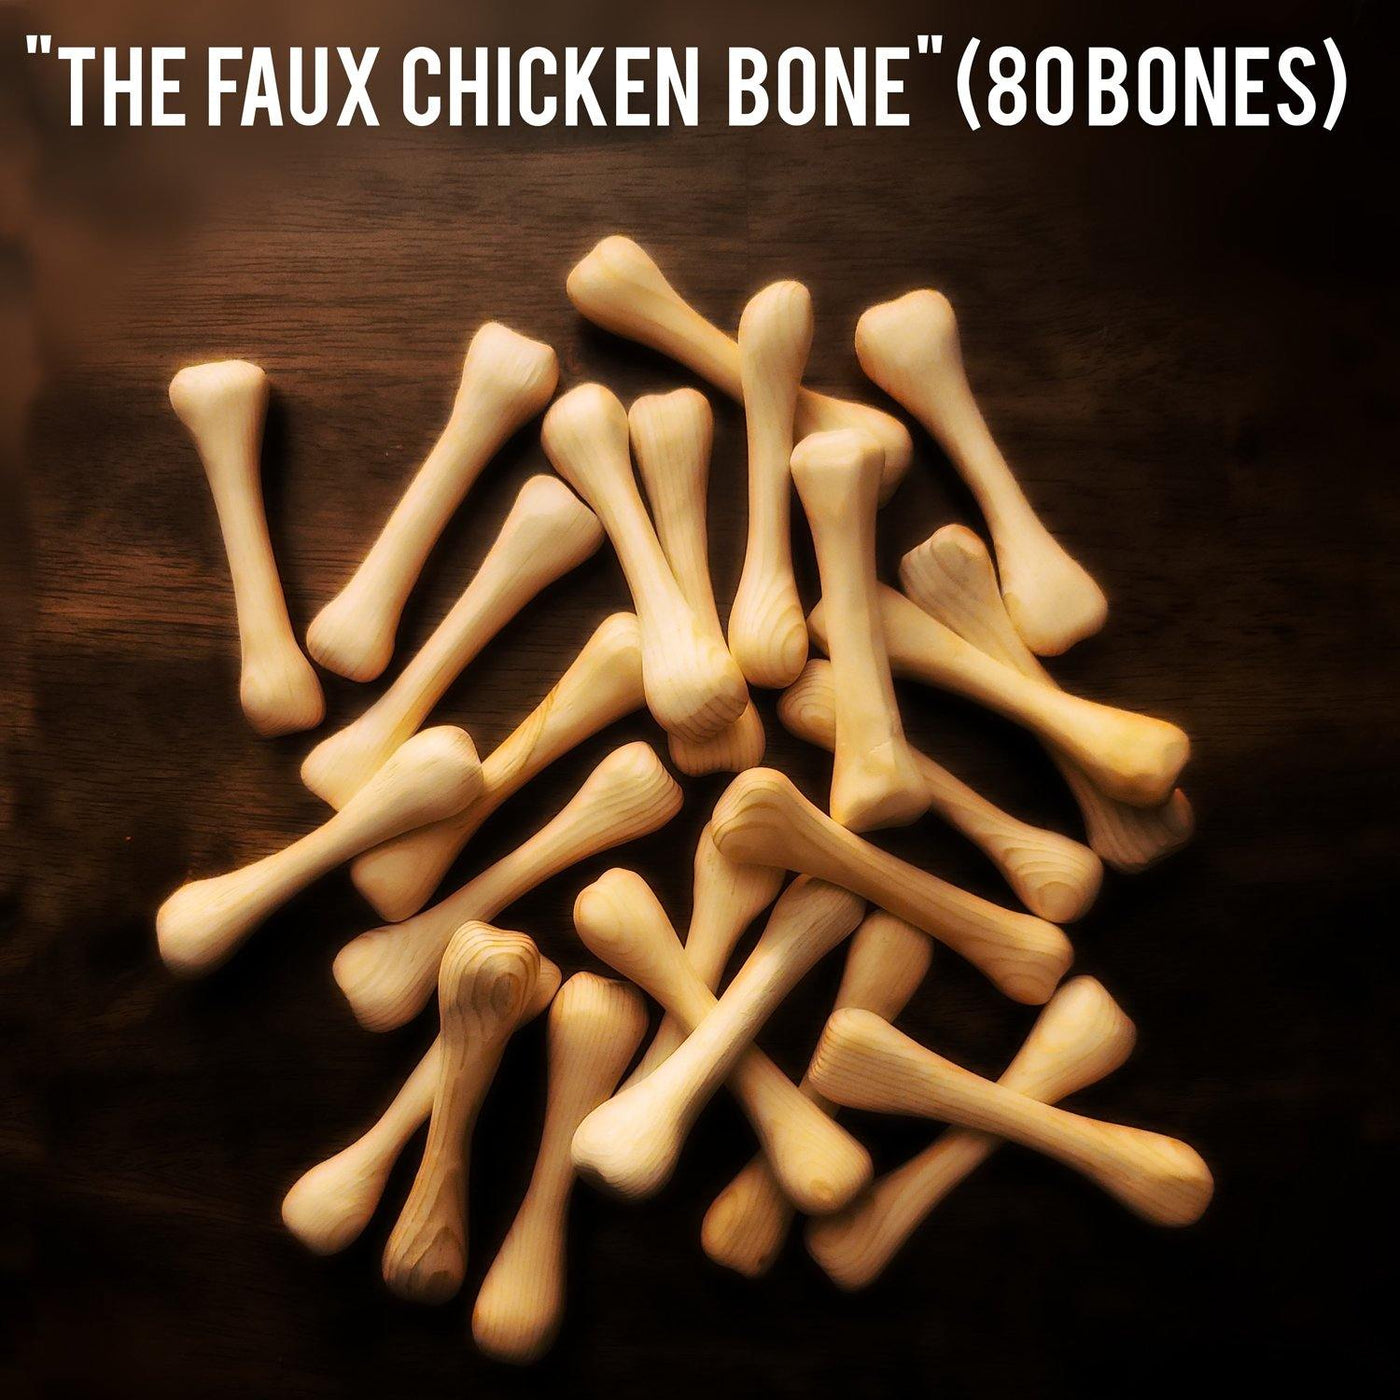 The Faux Chicken Bones